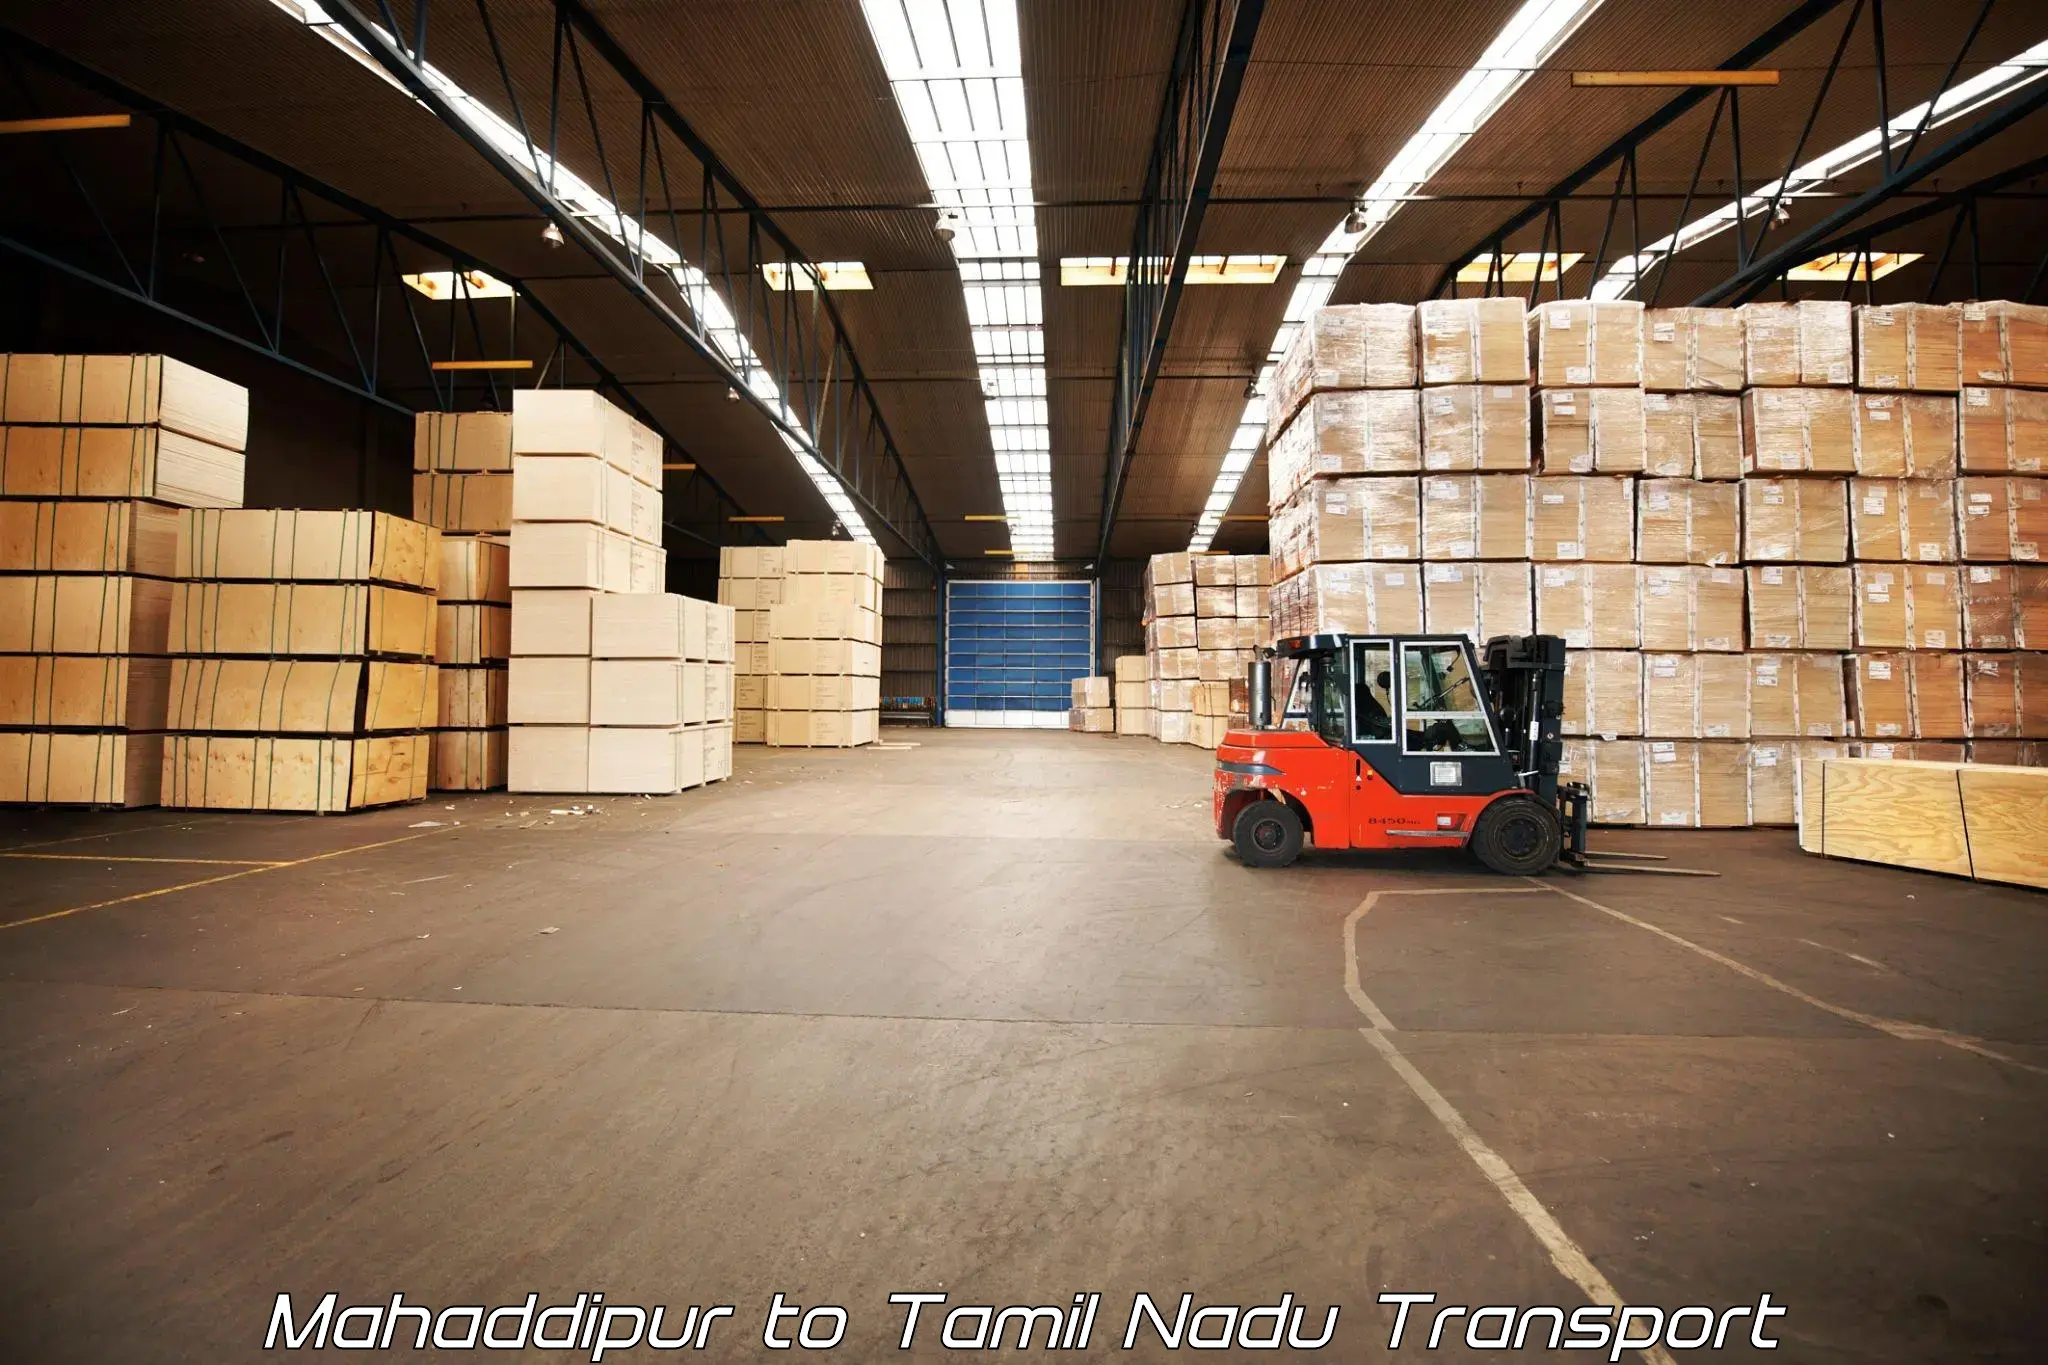 Container transport service Mahaddipur to Karambakkudi